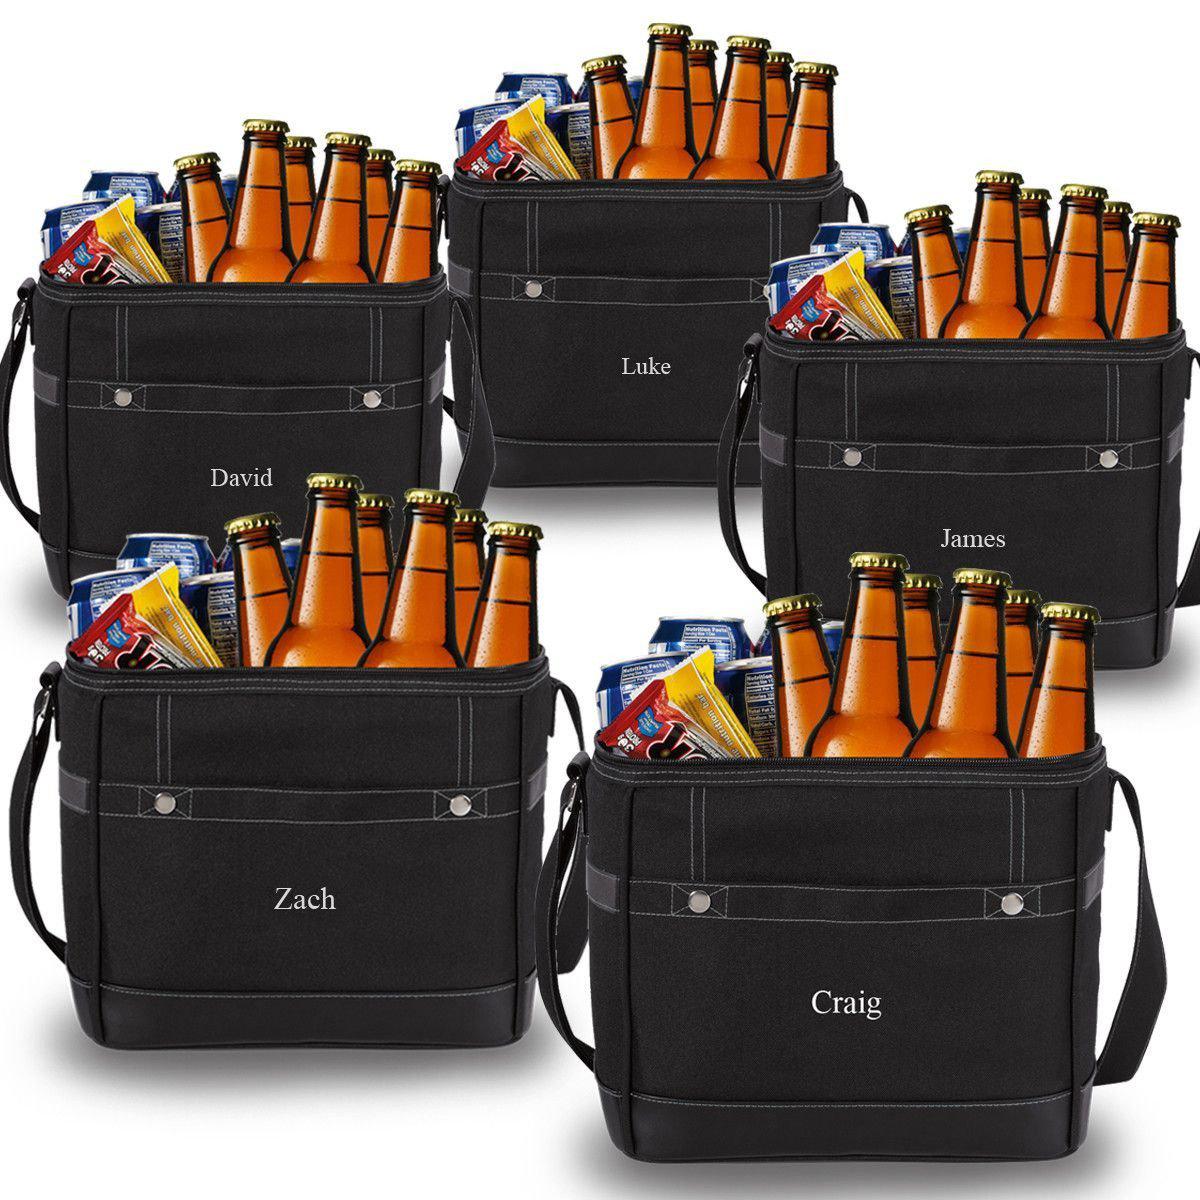 Personalized Beer Cooler Bag, Groomsmen Gift, Monogrammed